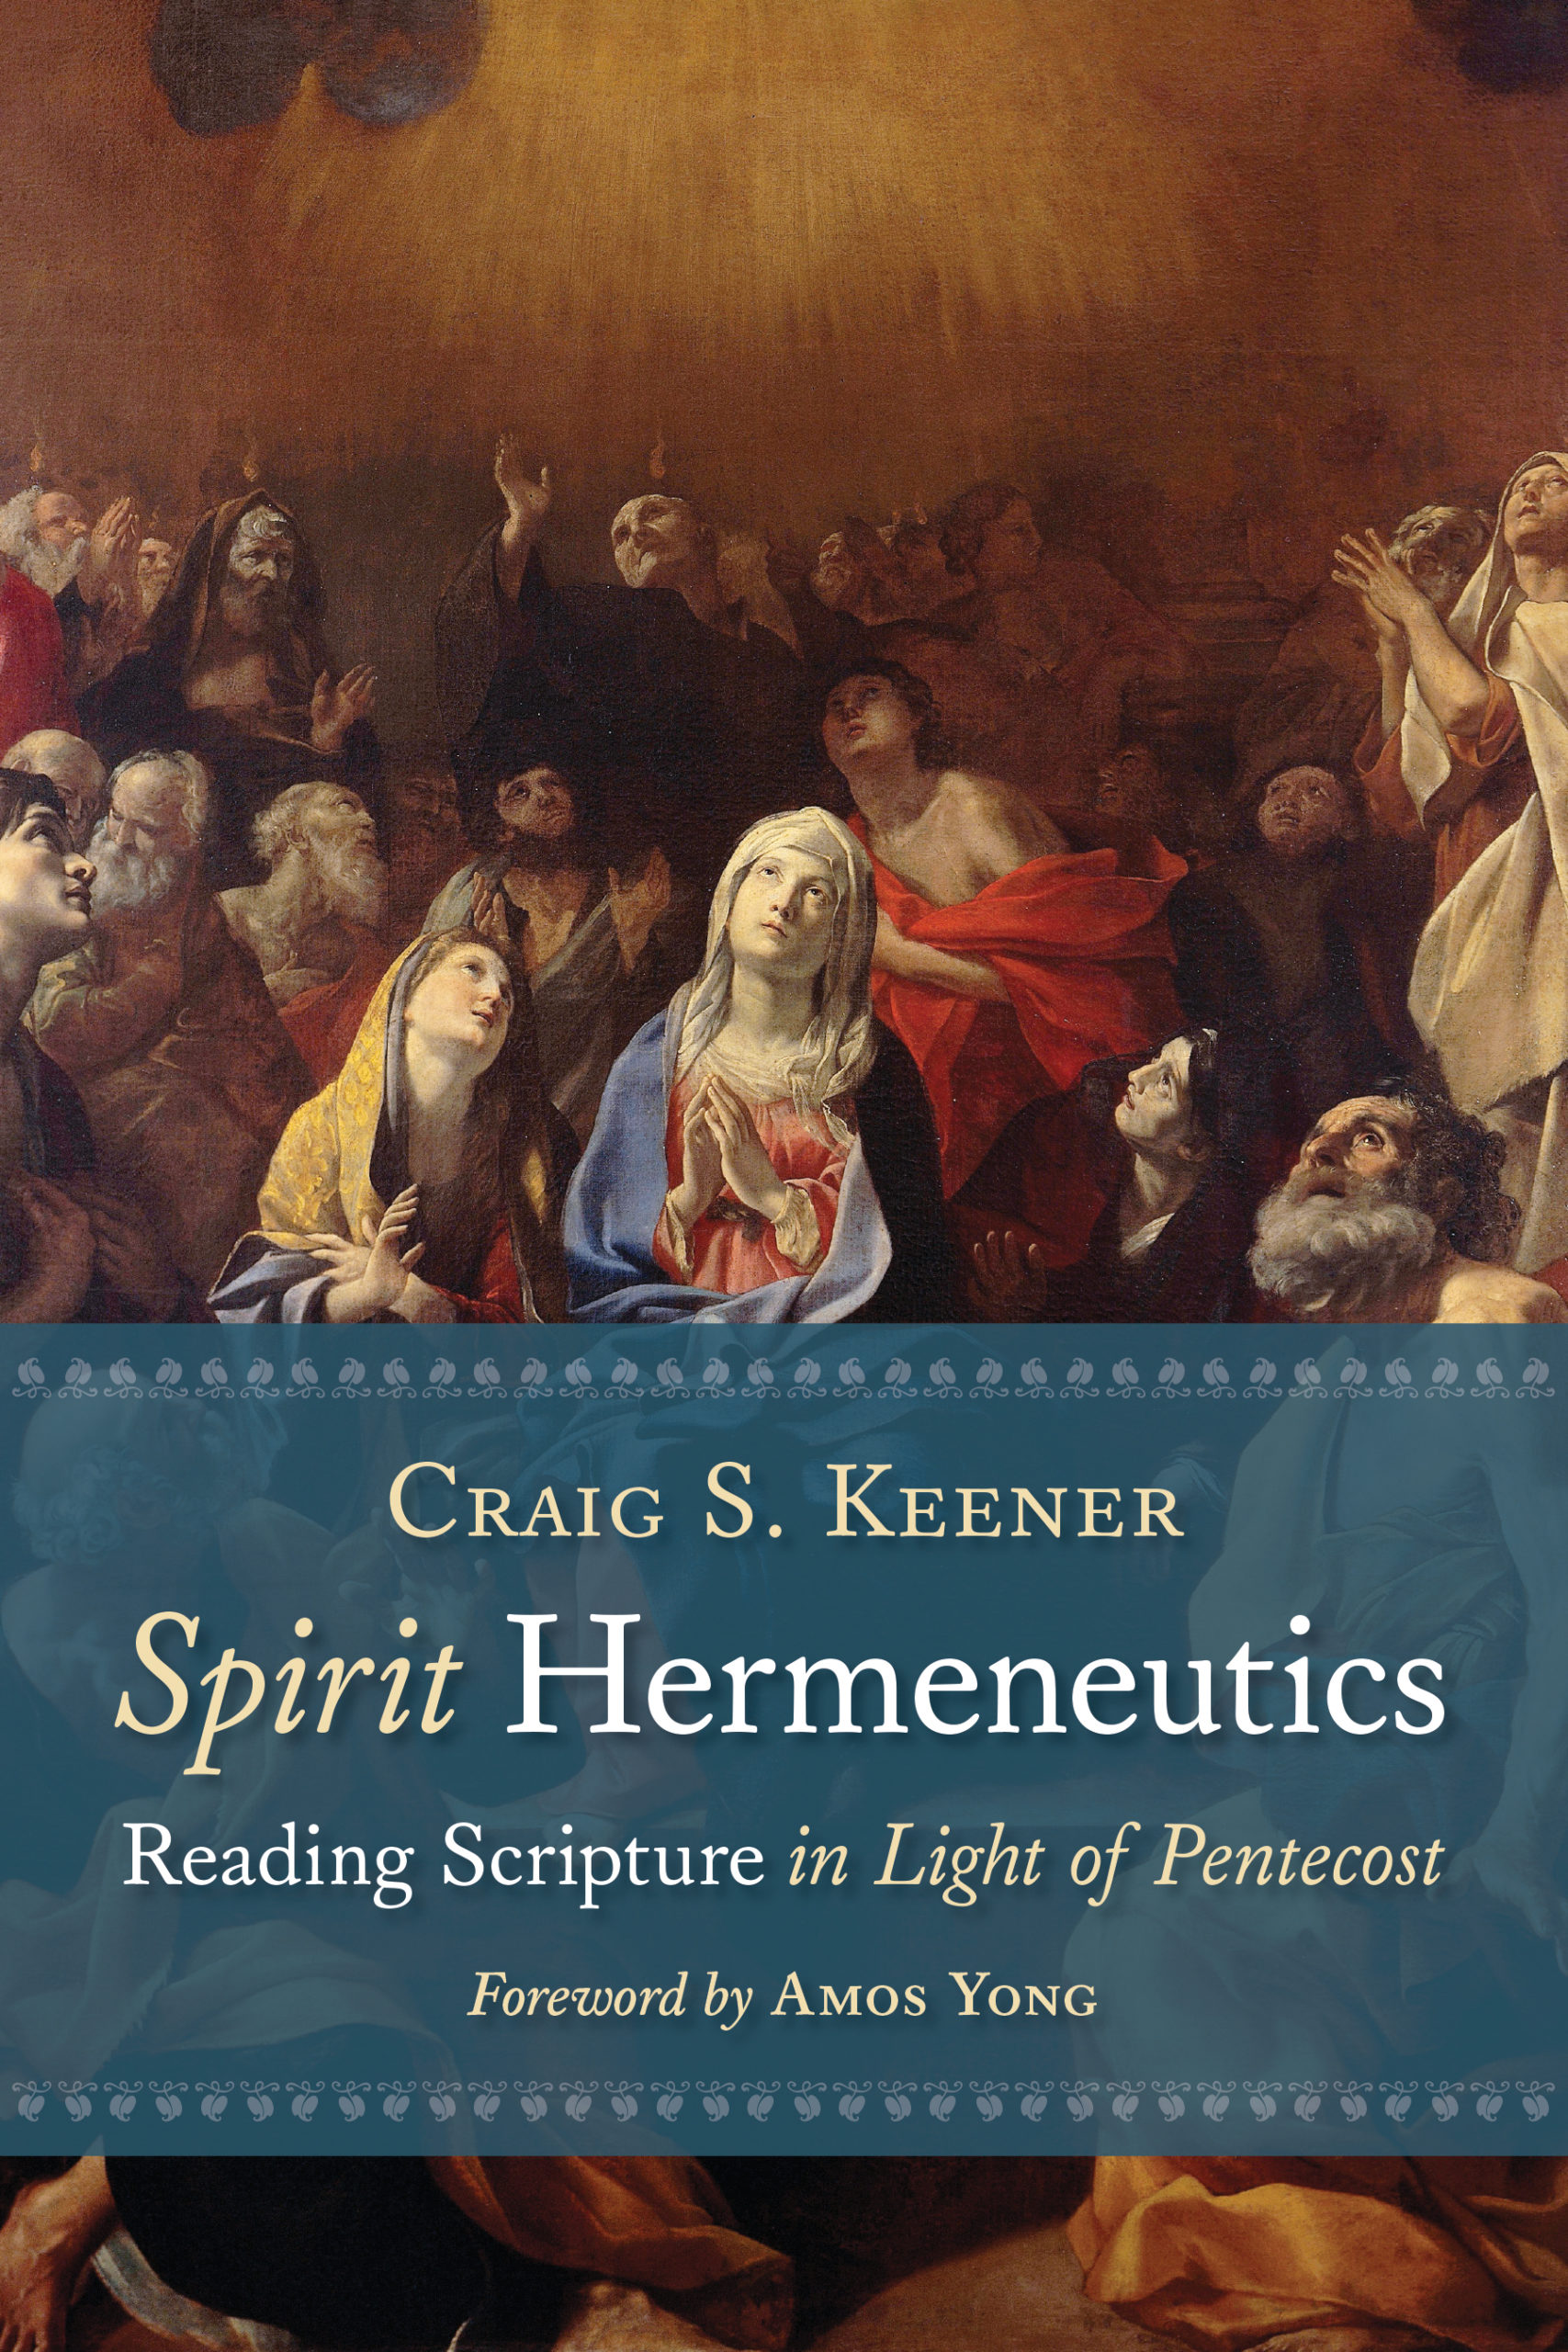 spirit hermeneutics book cover